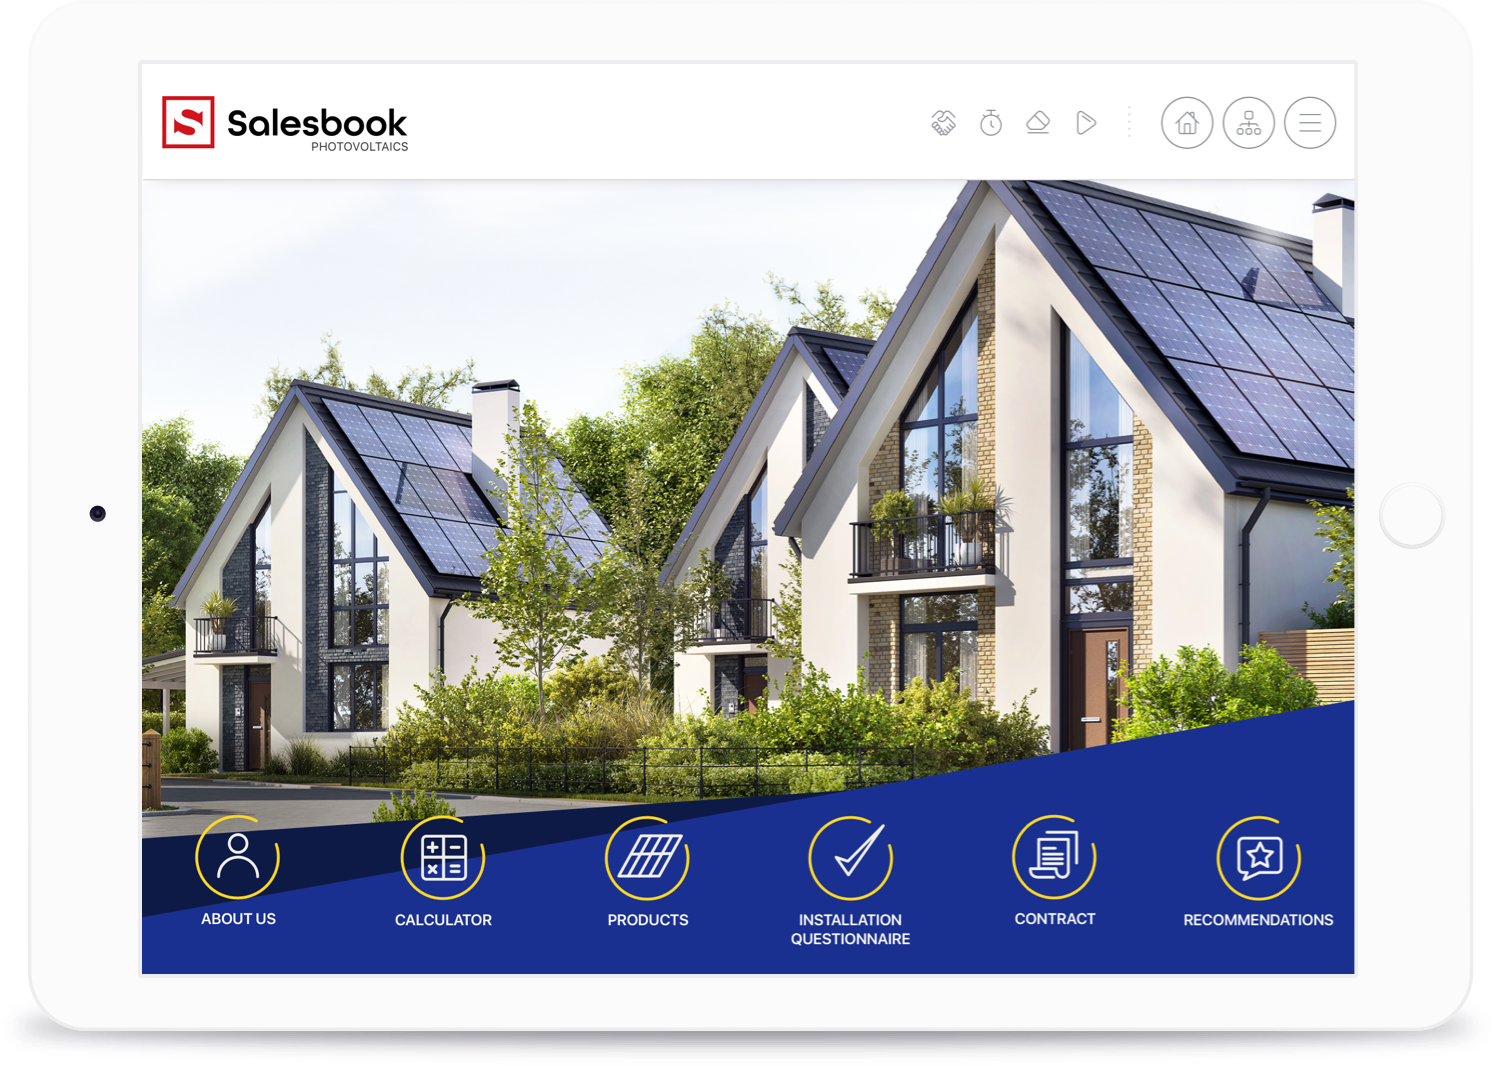 Salesbook for Solar Panels